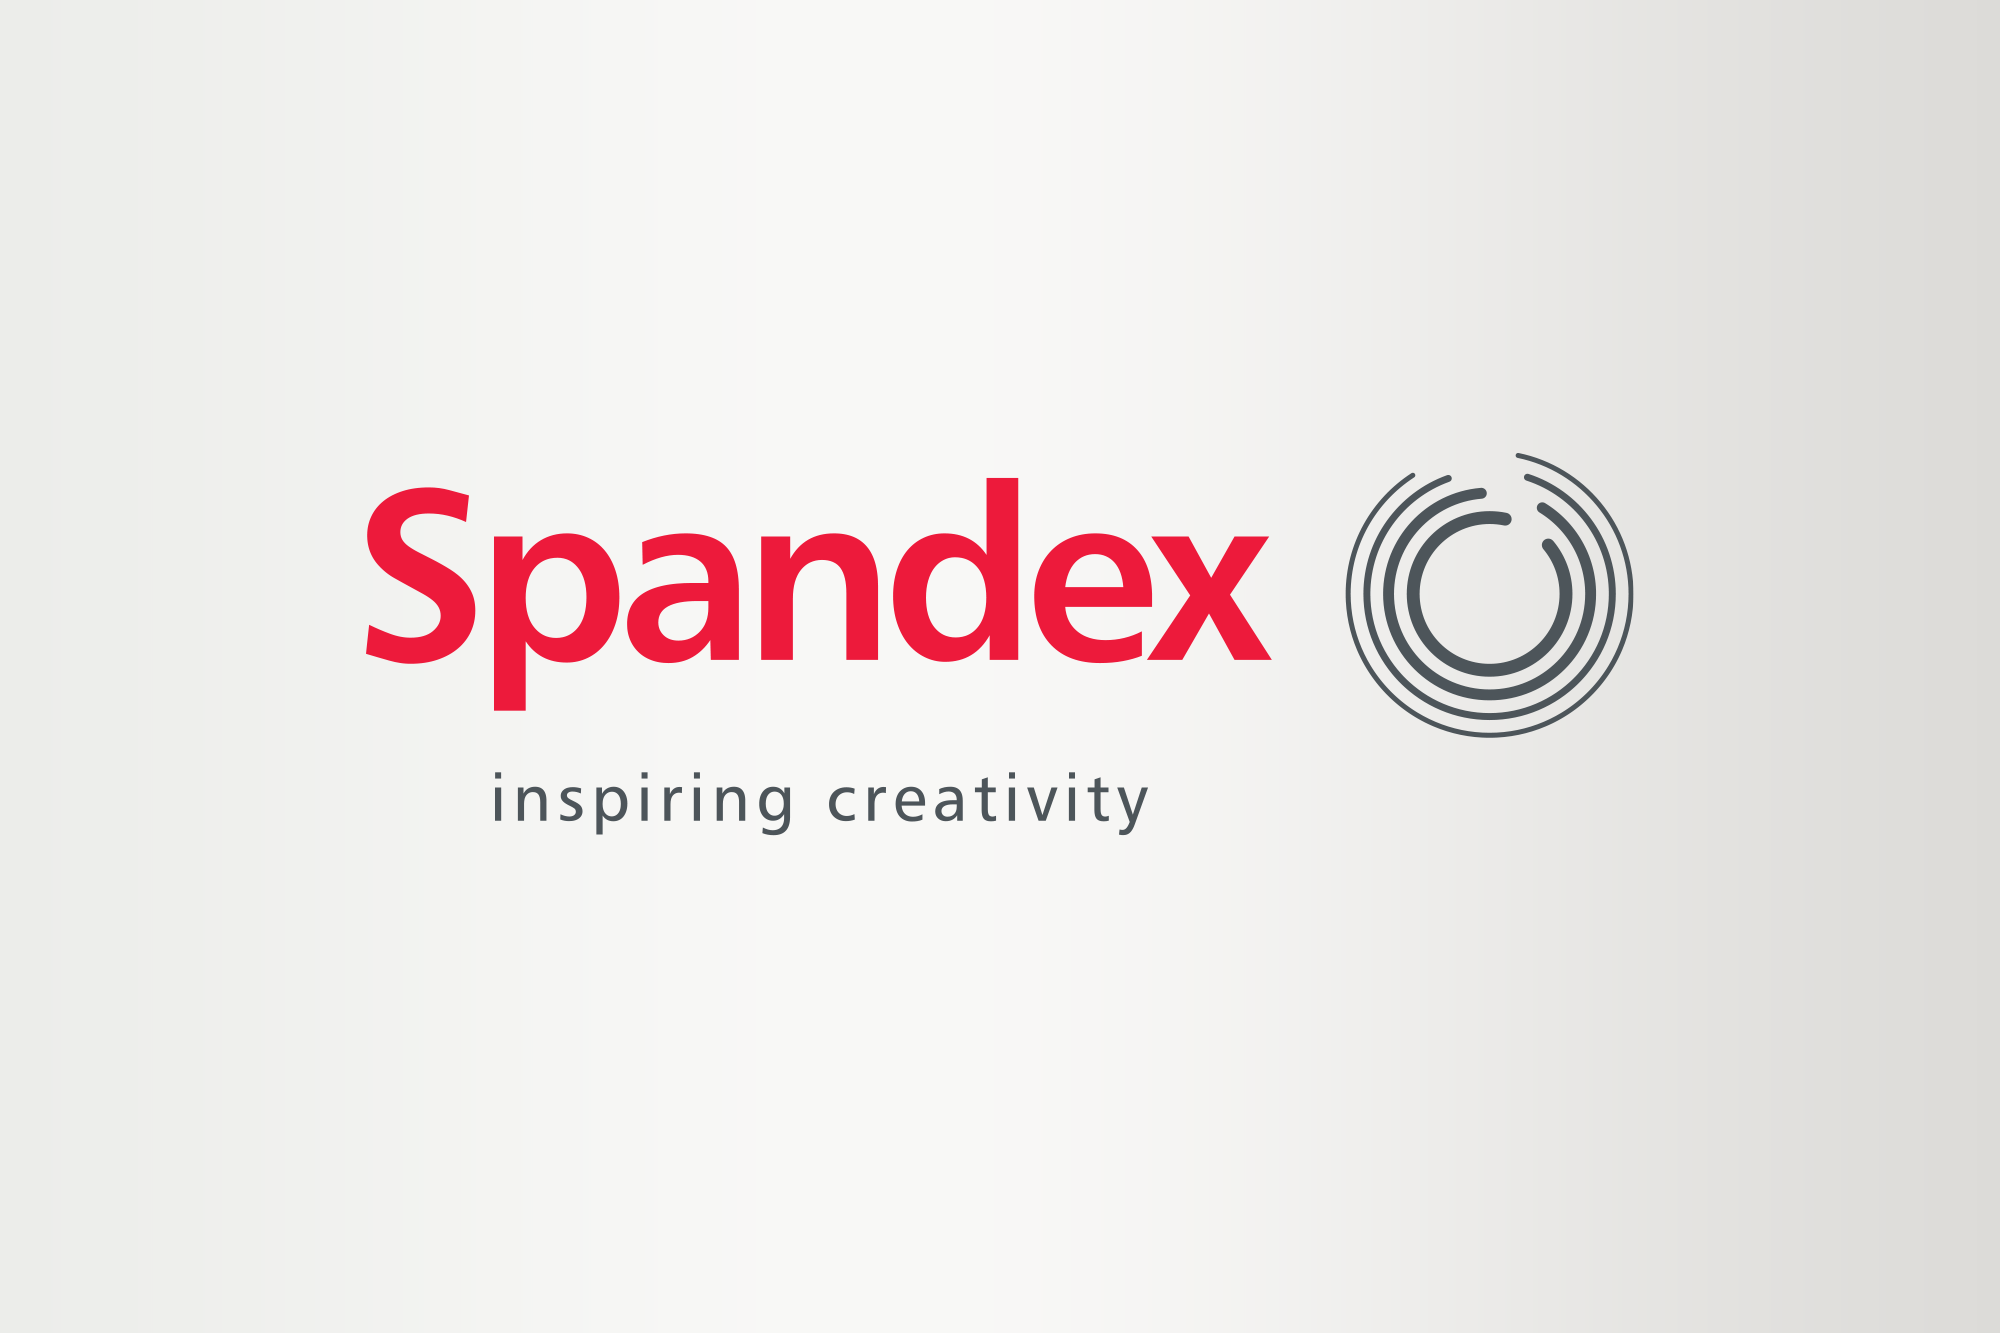 The fresh face of Spandex – inspiring creativity